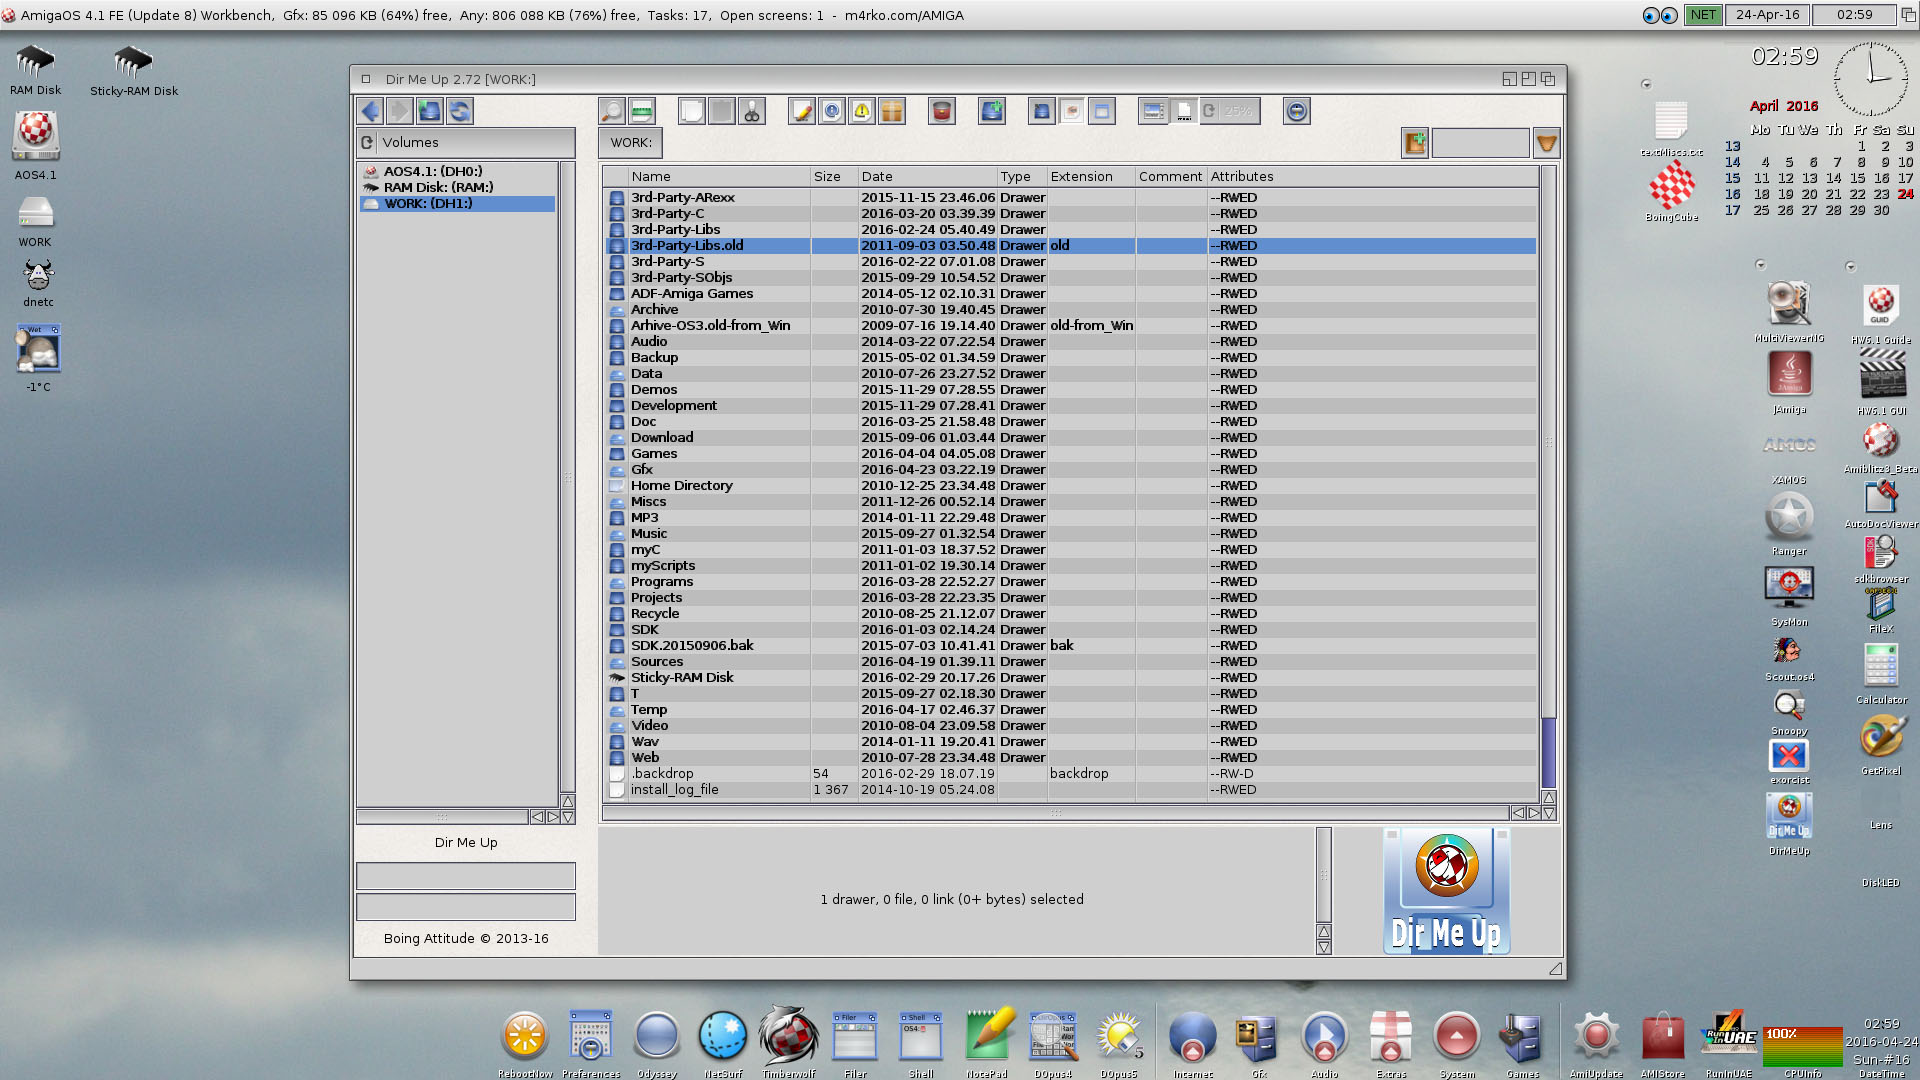 AmigaOS 4.1 FE Workbench-Dir Me Up-2.72